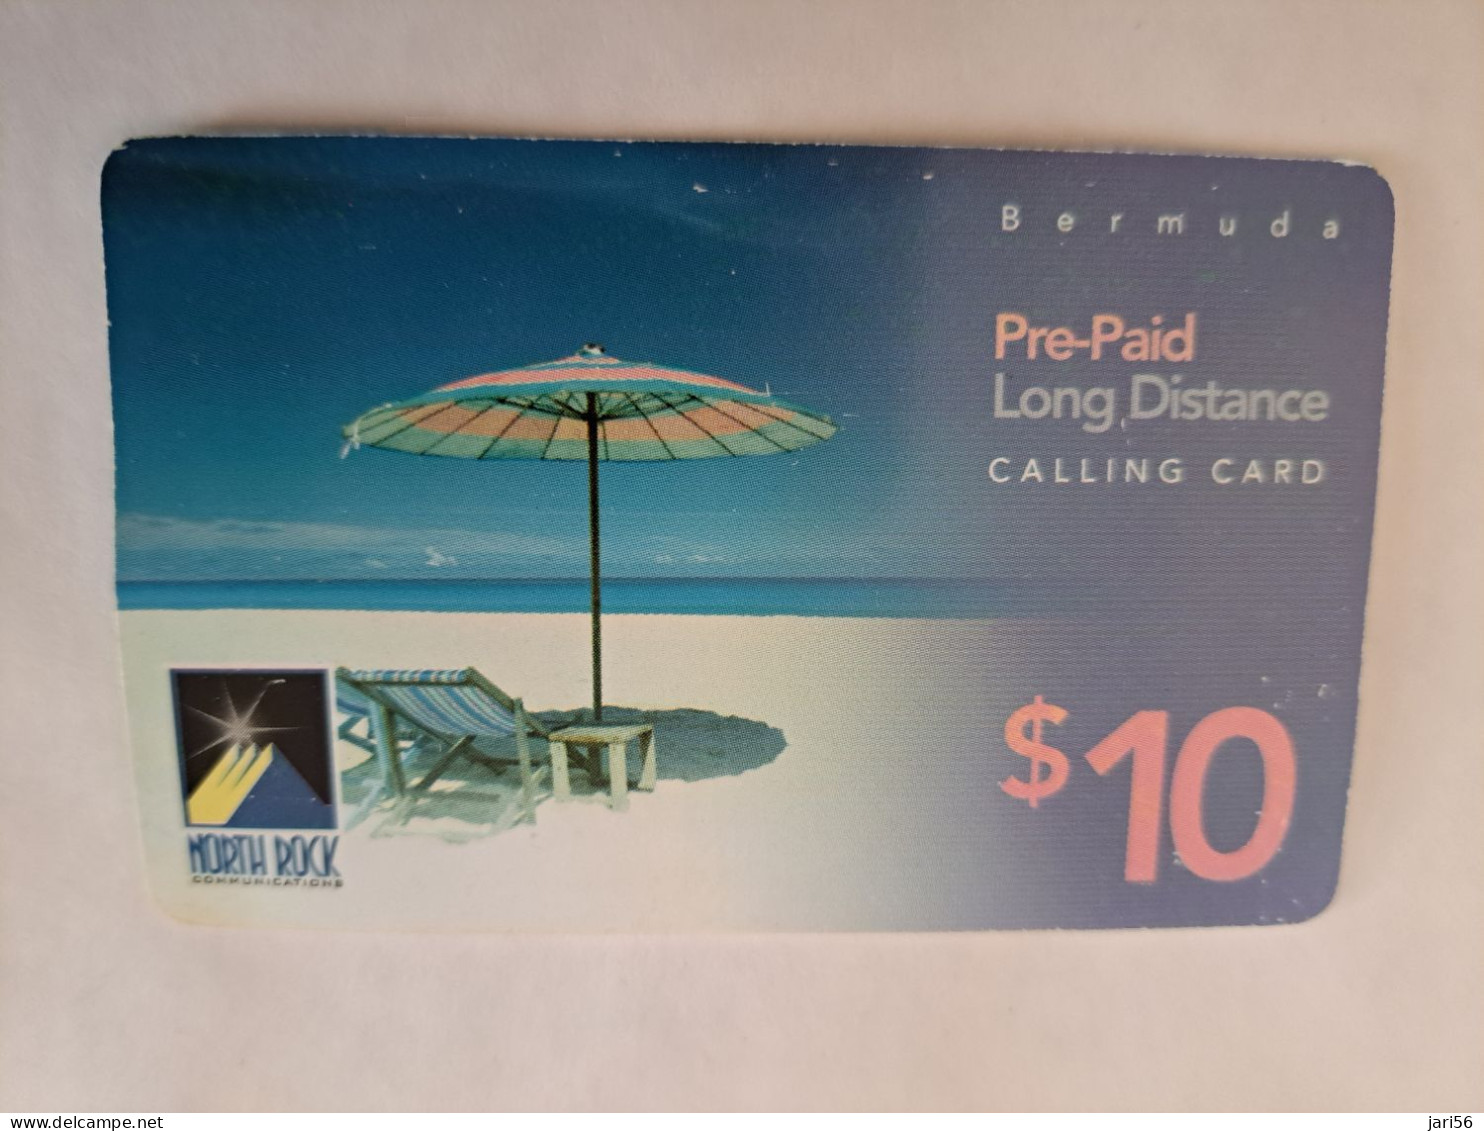 BERMUDA  $10,-,-NORTH ROCK   BERMUDA / PARASOL ON BEACH /  3/2005/   PREPAID CARD  Fine USED  **14794** - Bermude